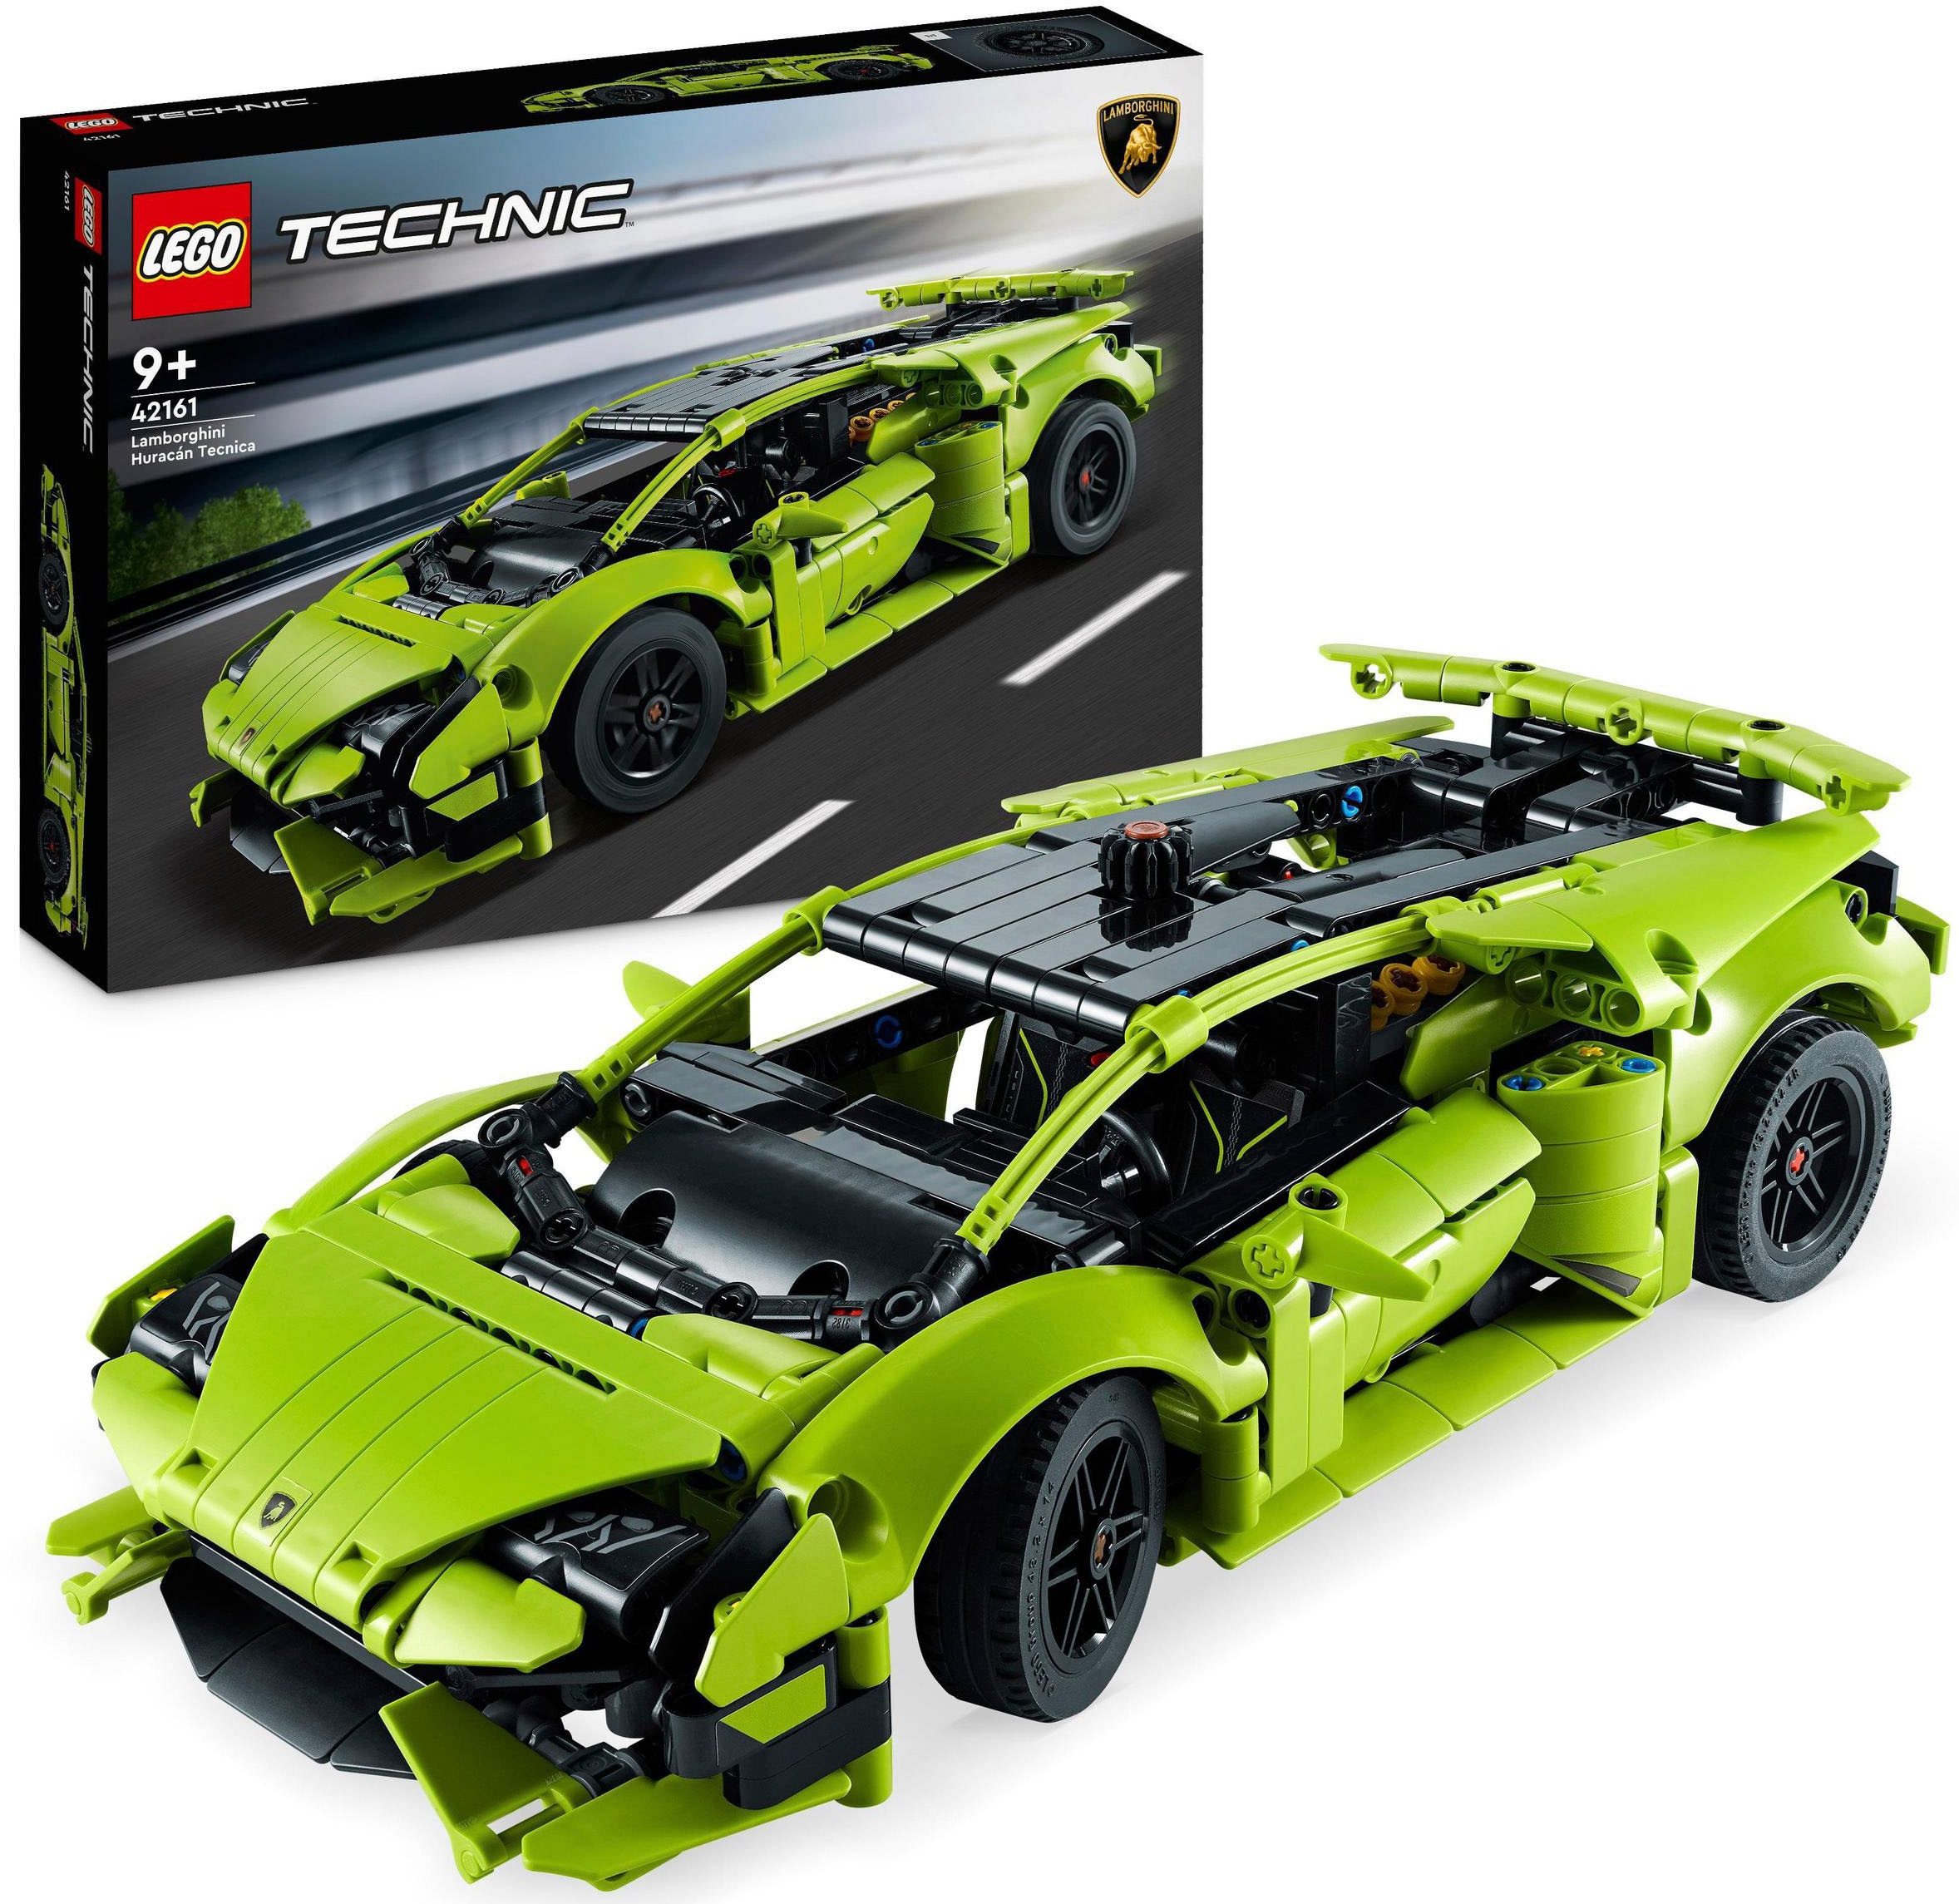 Konstruktionsspielsteine »Lamborghini Huracán Tecnica (42161), LEGO® Technic«, (806...